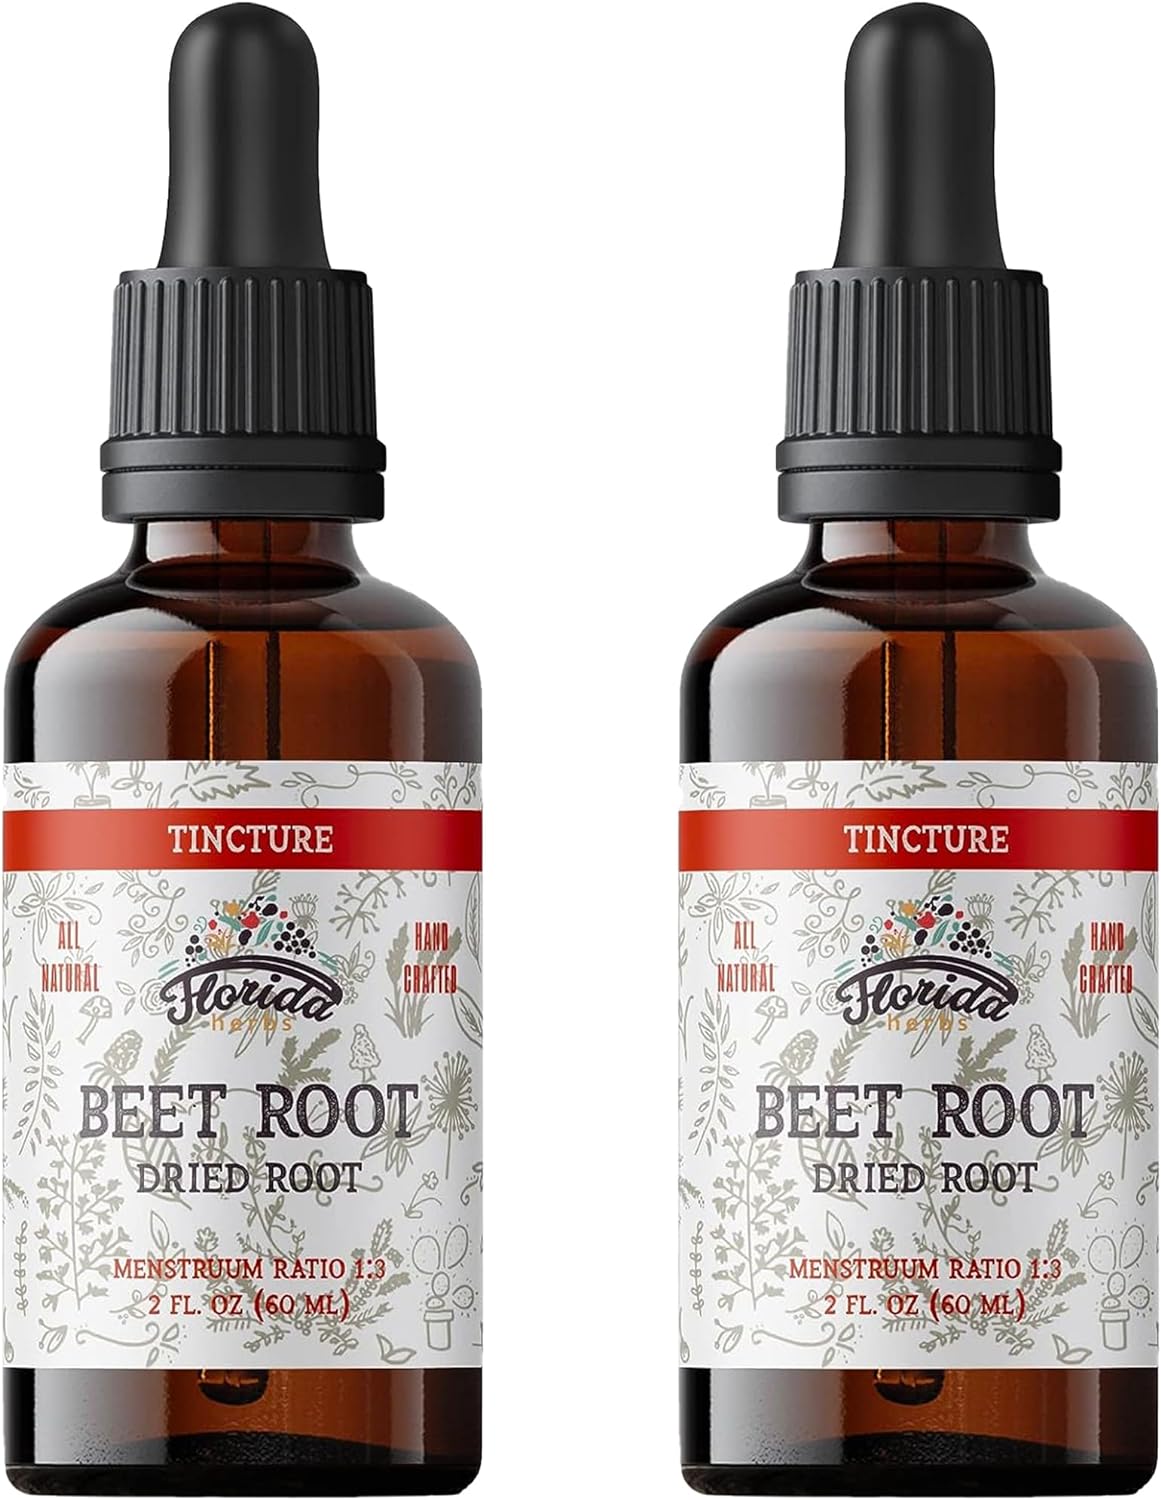 Florida Herbs Beet Root Tincture 60Ml. 2 Pack